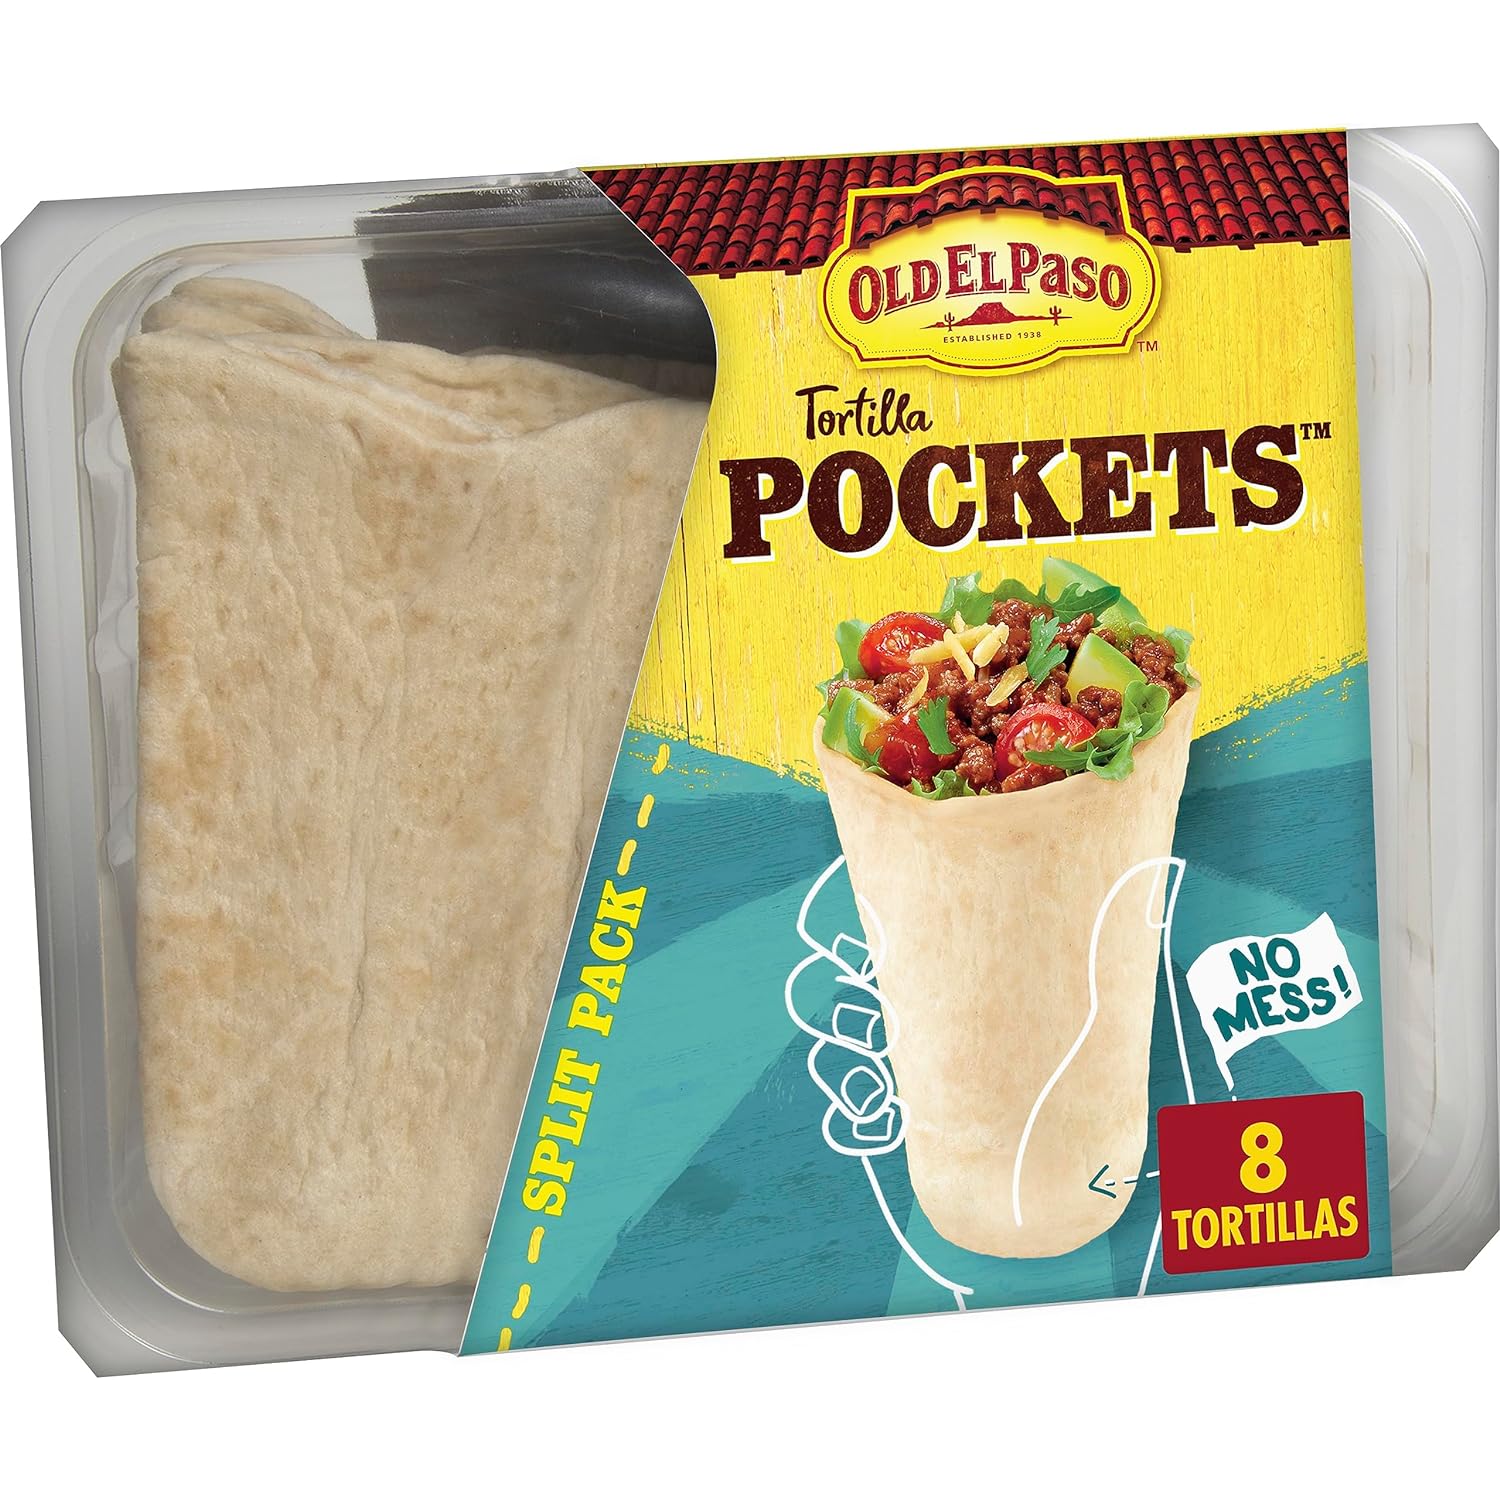 Old El Paso Tortilla Pockets, 8 Pockets, 8.4 oz